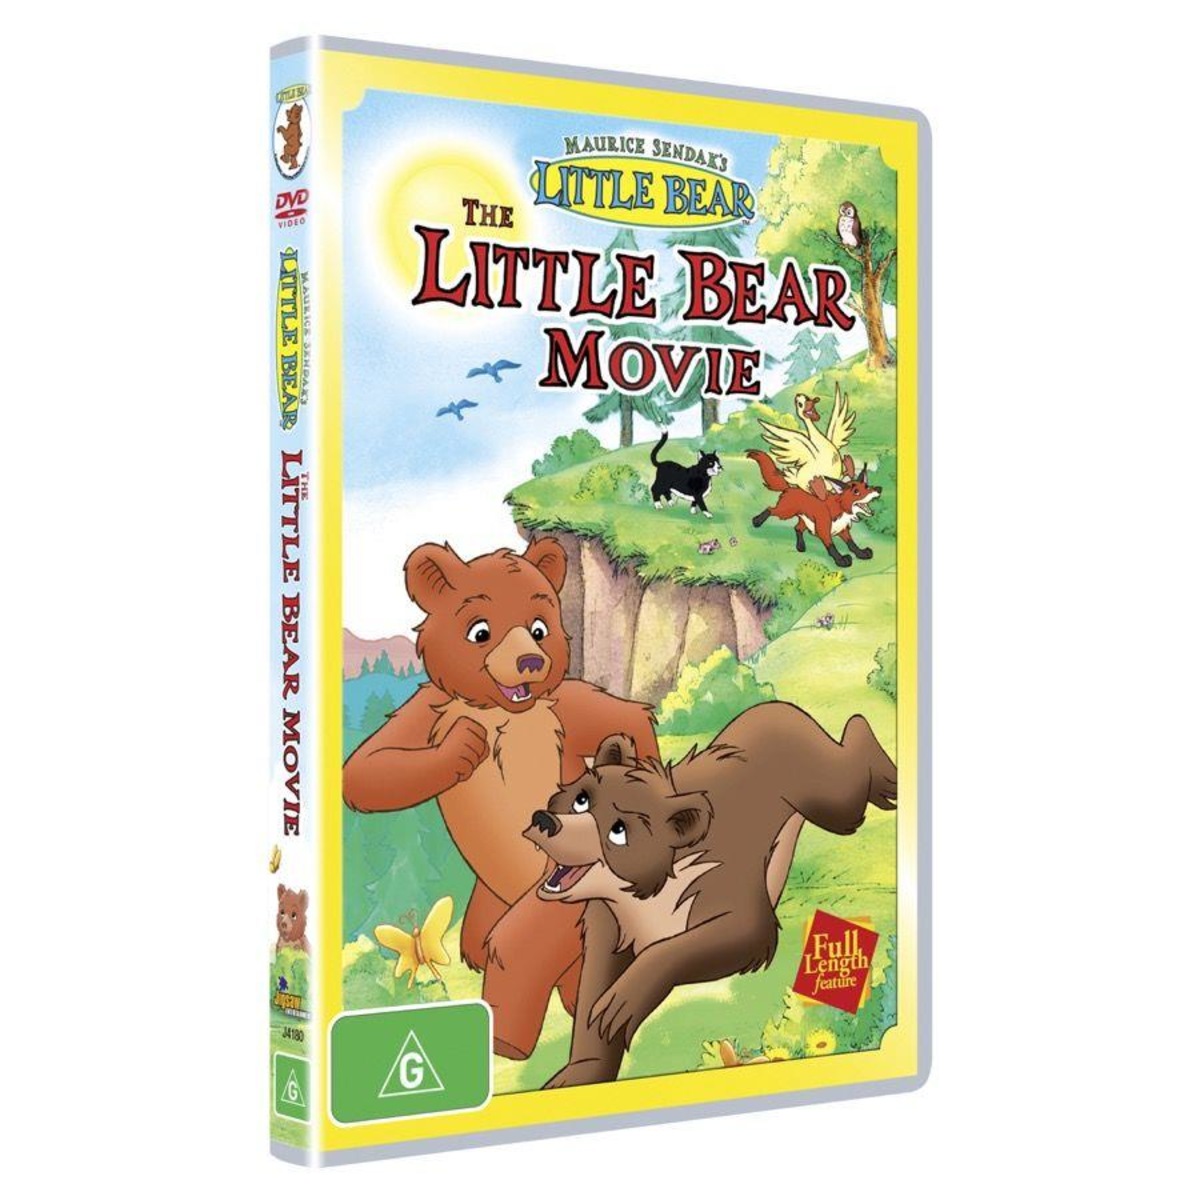 The Little Bear Movie - DVD